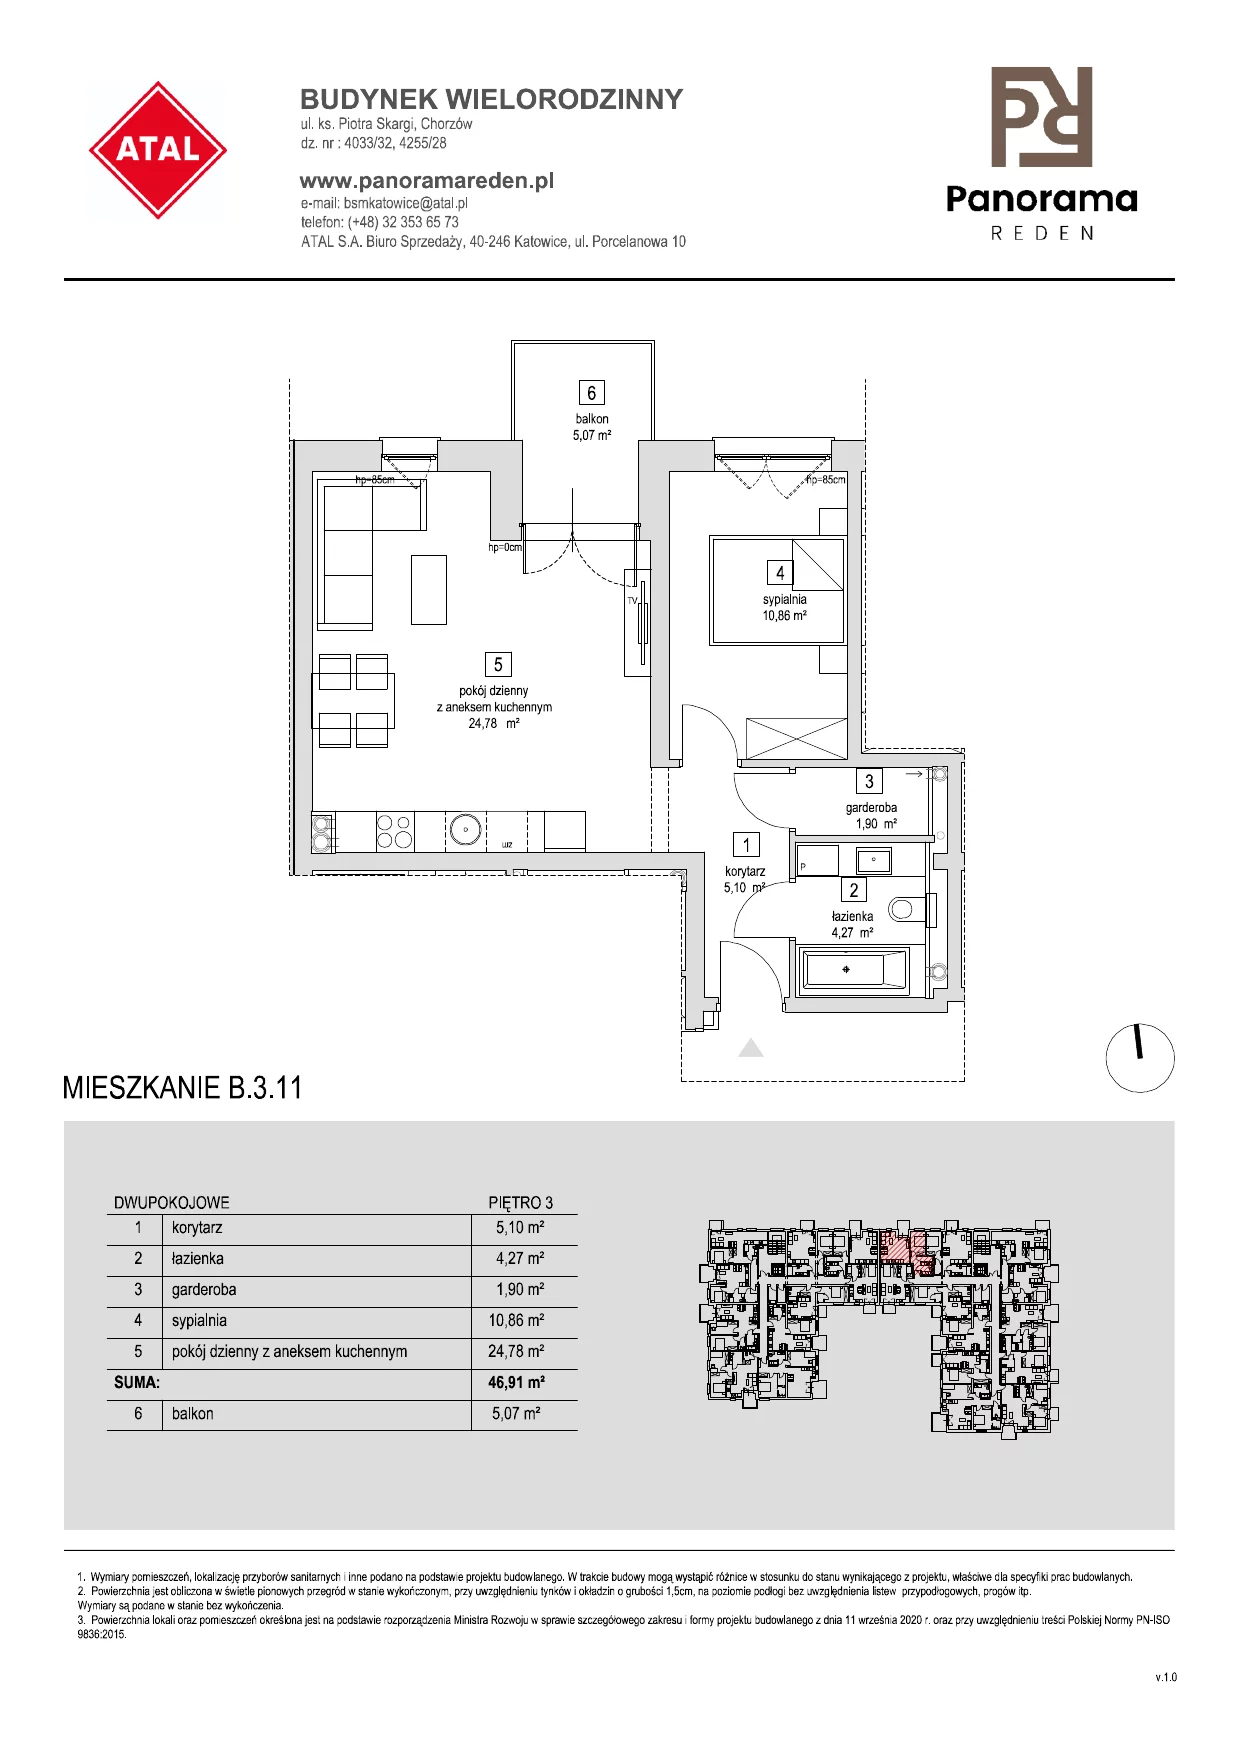 Mieszkanie 47,20 m², piętro 3, oferta nr B-3-M11, Panorama Reden, Chorzów, Centrum, Centrum, ul. Piotra Skargi